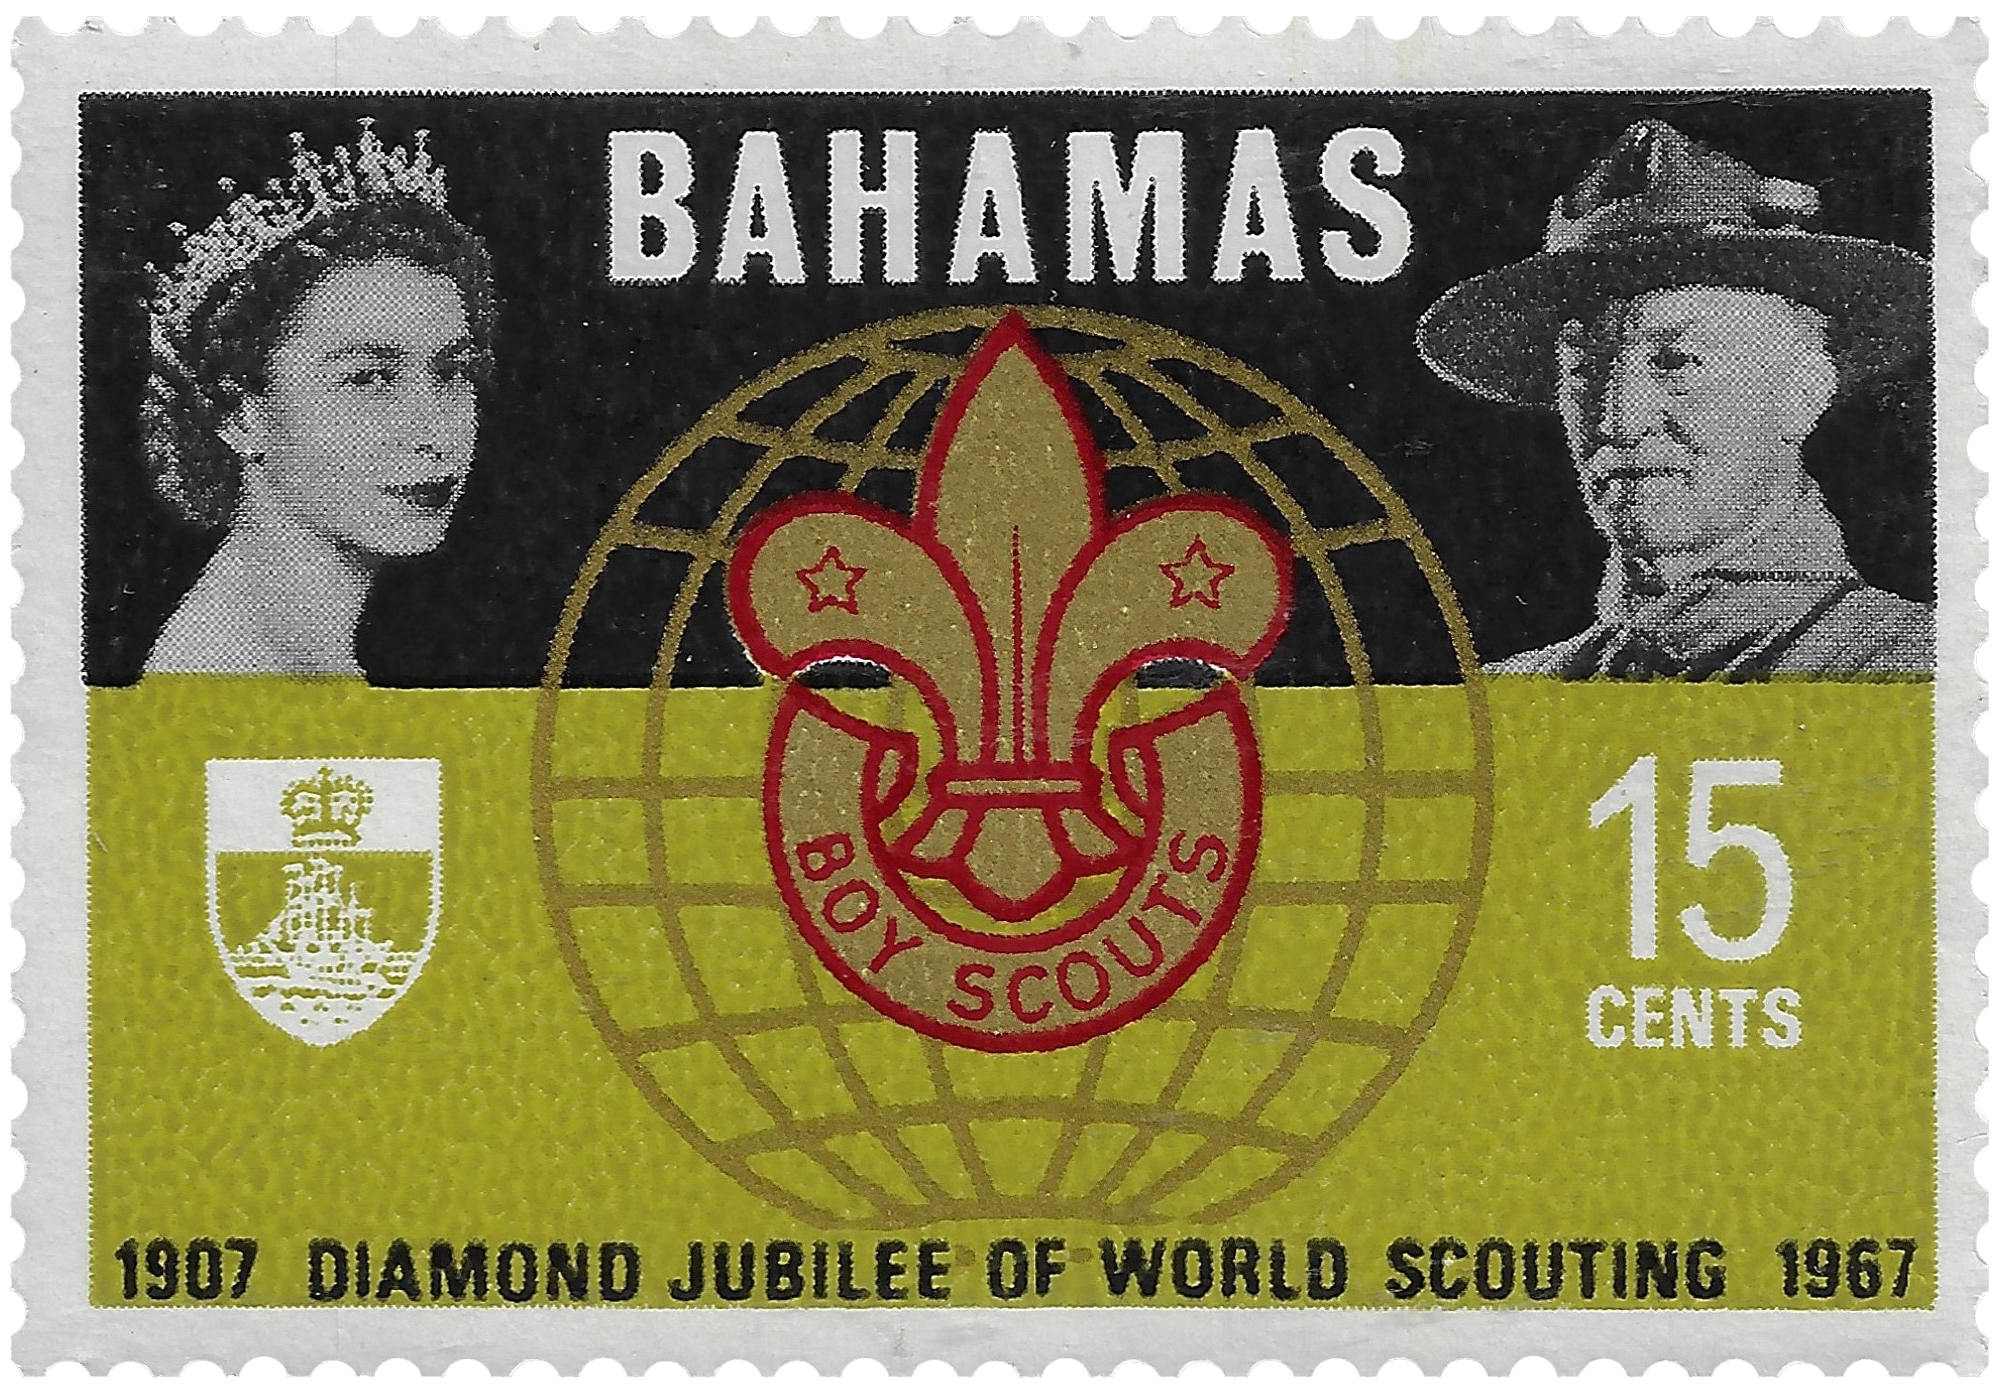 15c 1967, 1907 Diamond Jubilee of World Scouting 1967